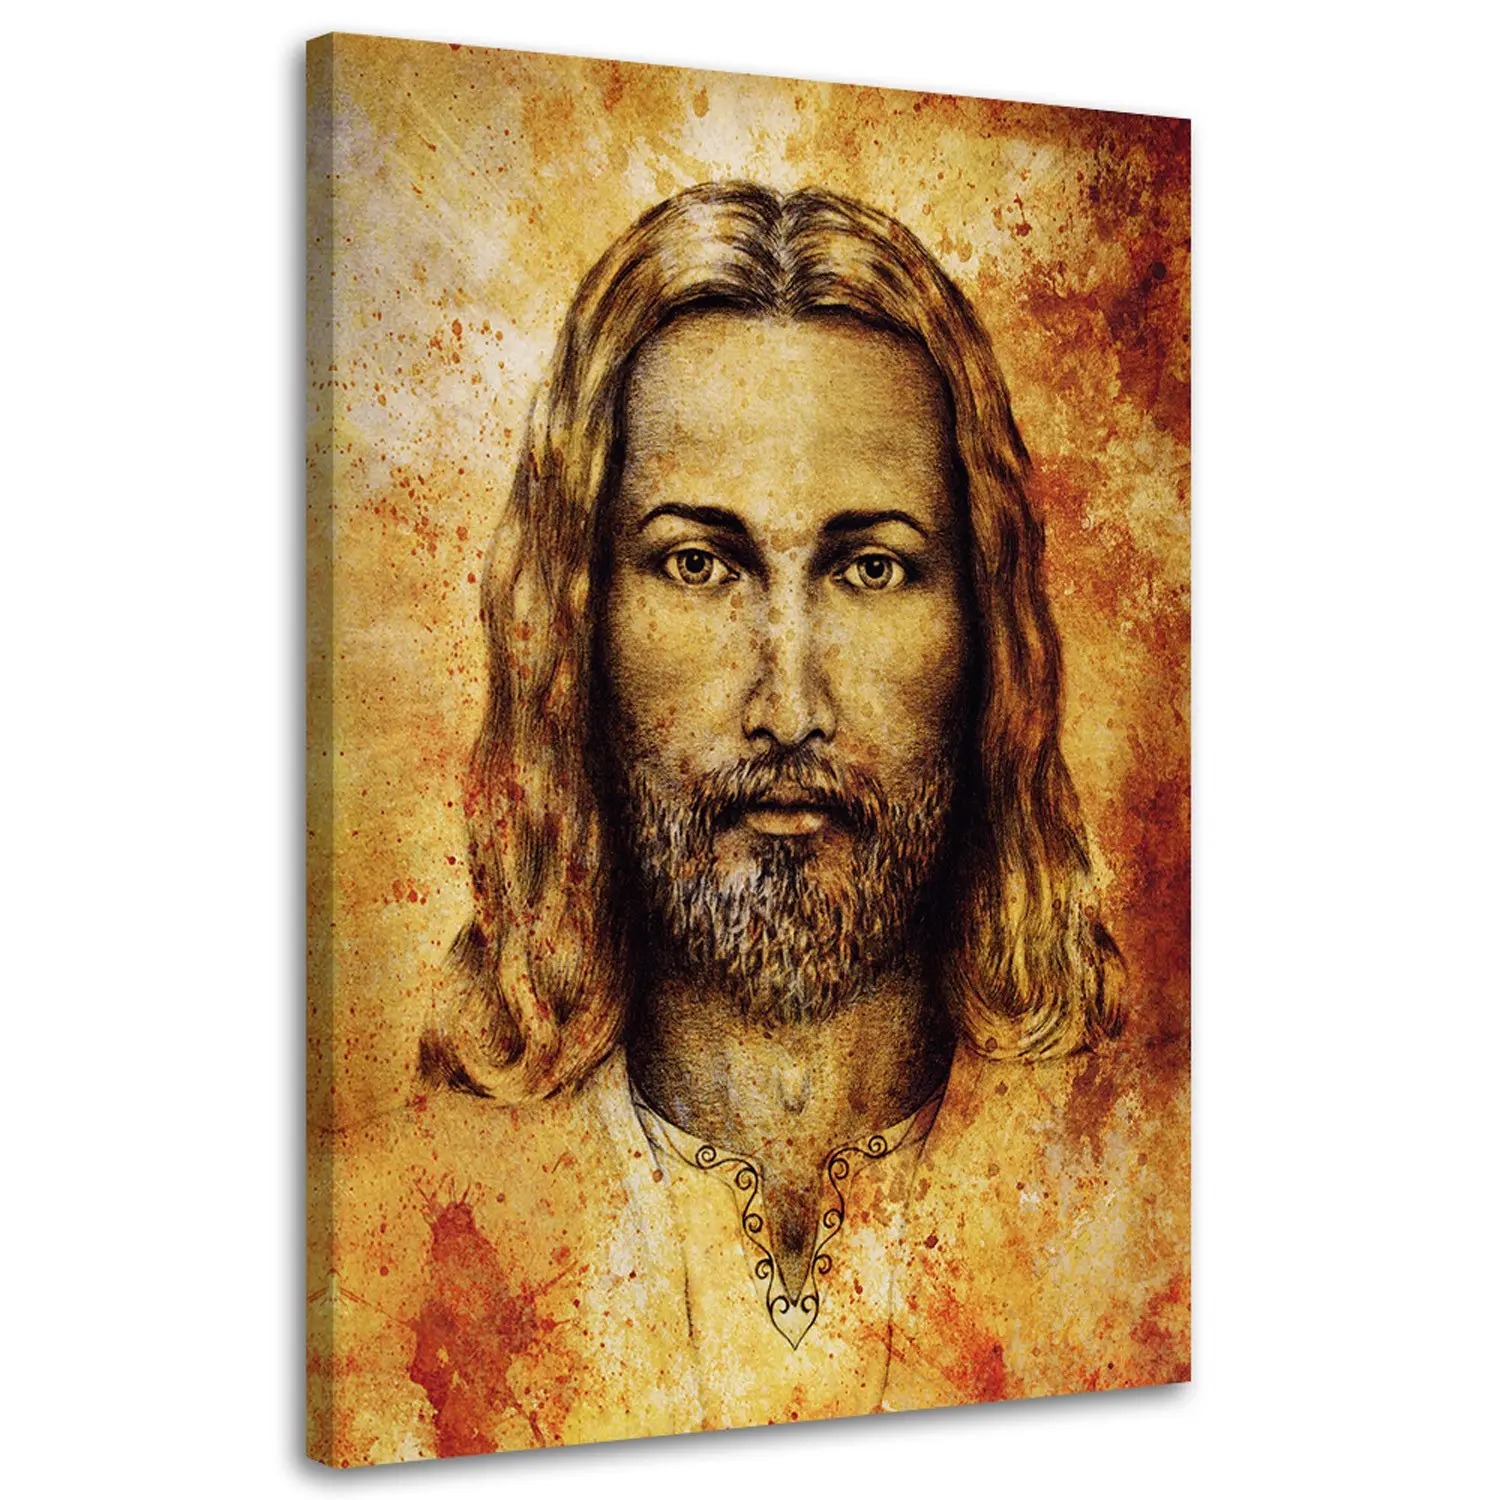 Religion Jesus Leinwandbild Christus